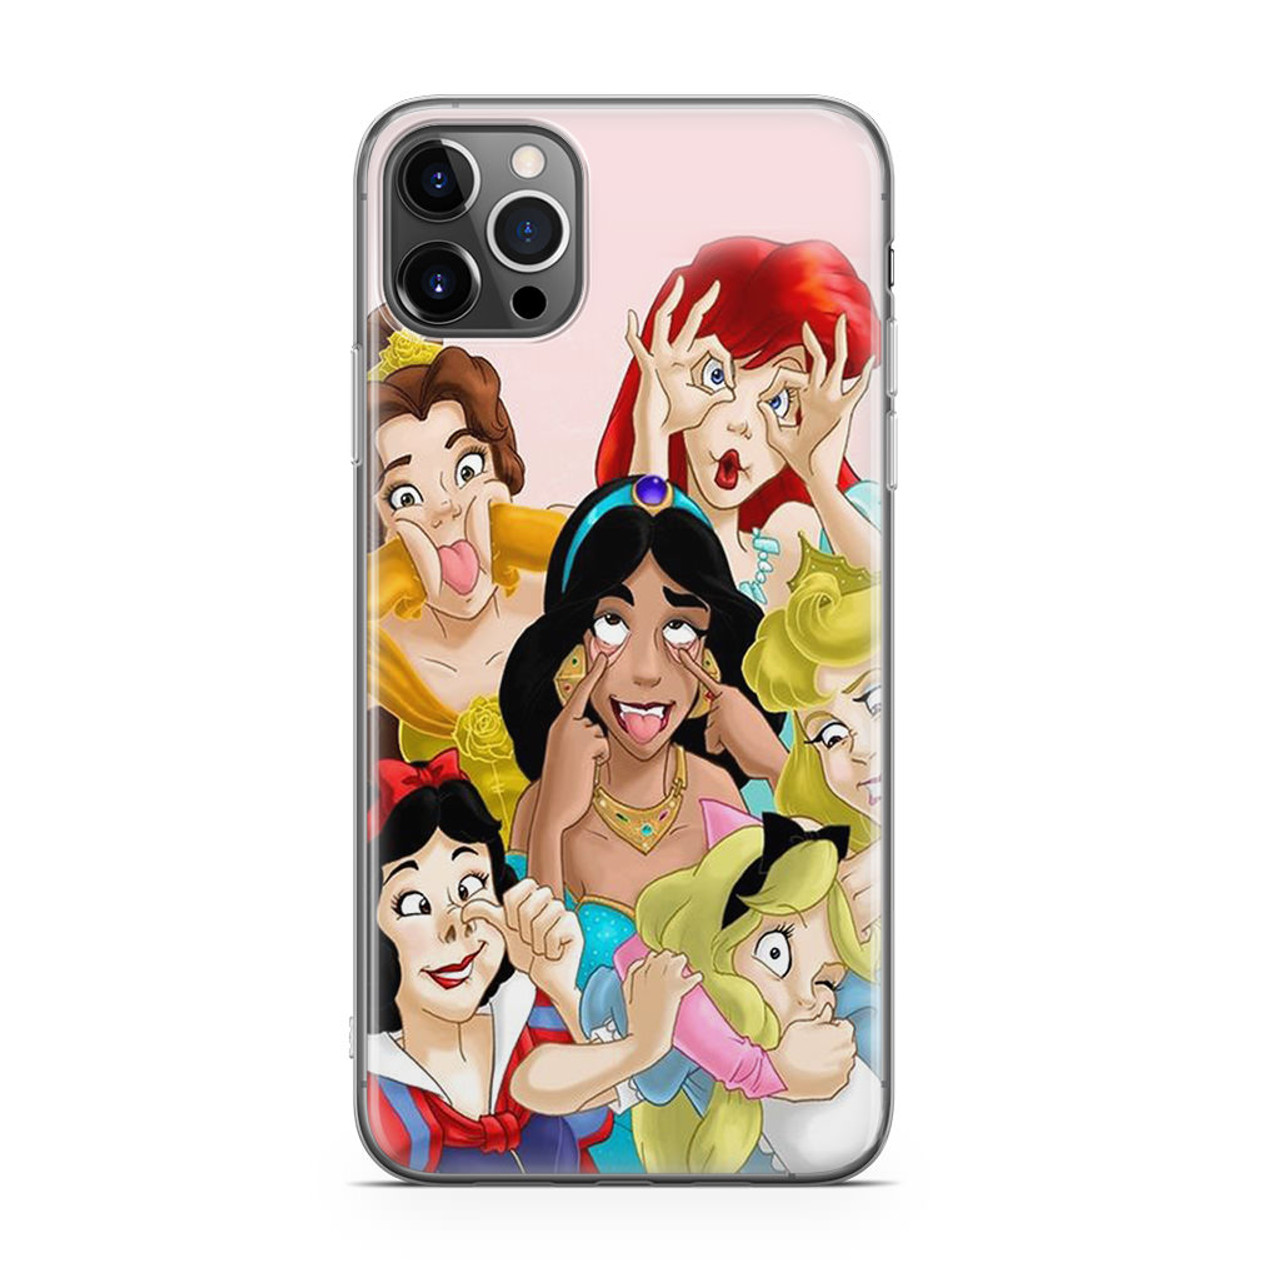 disney princess anime iphone 11 hoesjes – hoesje voor mobiele telefoons iphone huawei hoesjes-iphone4hoesjes